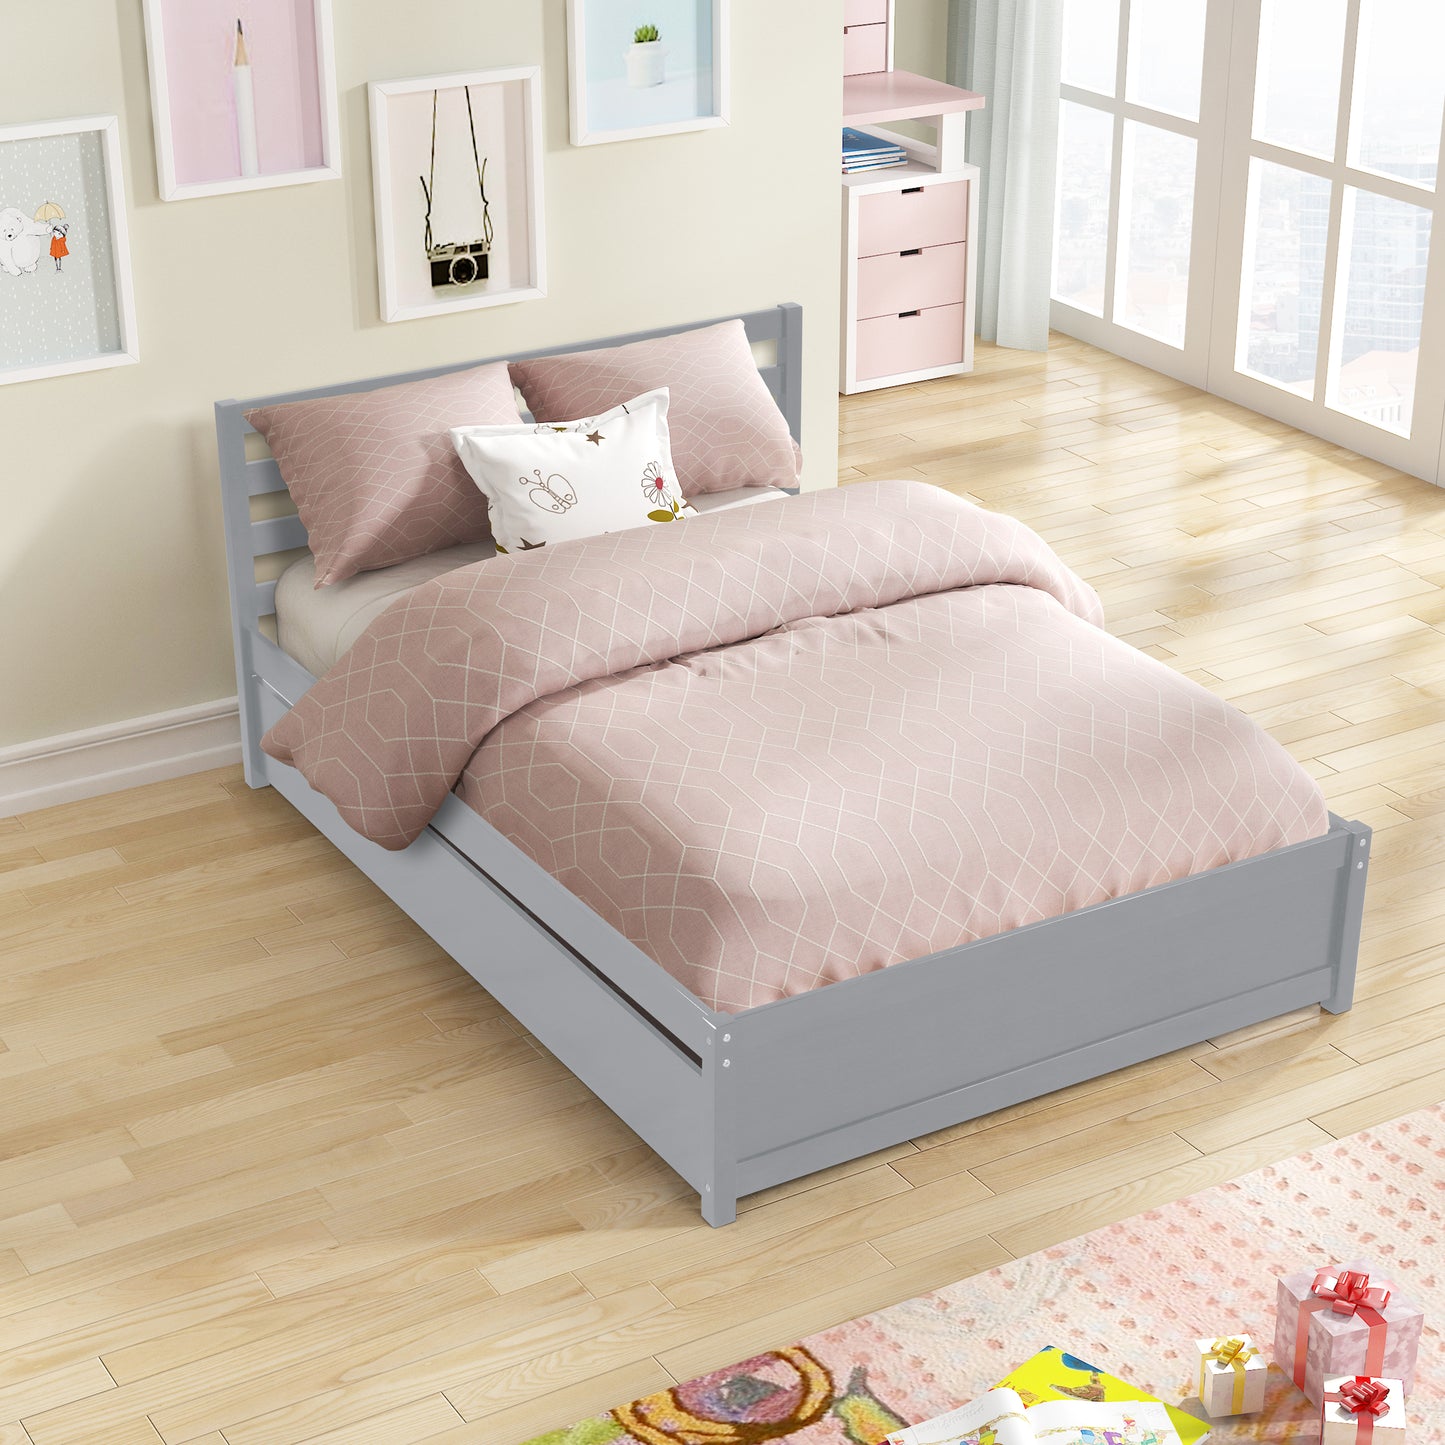 SYNGAR Full Size Bed Frame, Full Platform Bed with Trundle for Kids Teens Adult, Gray, LJ2563